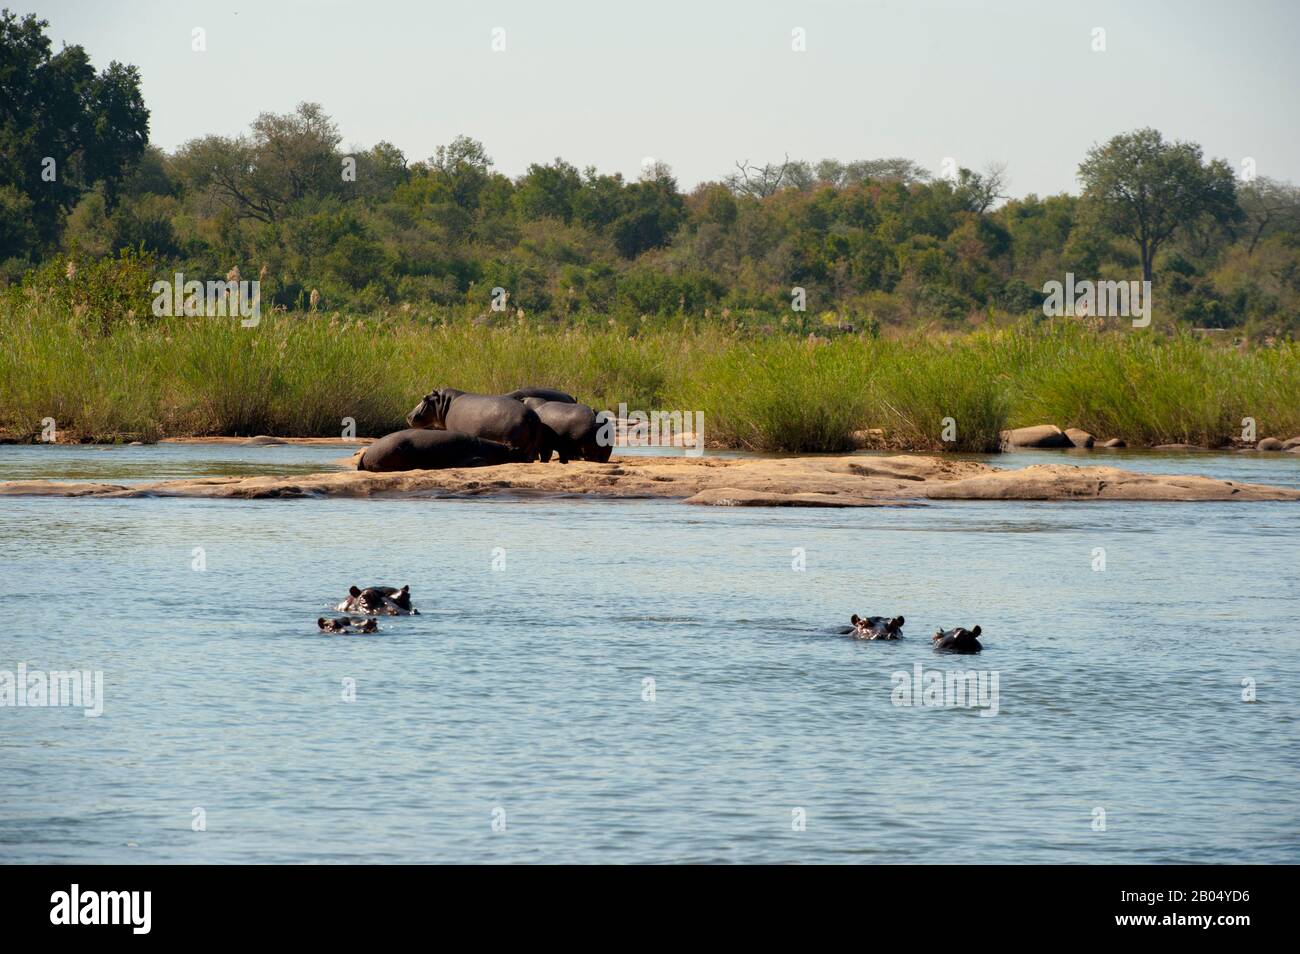 Il fiume Sabie con ippopotami nella Riserva di Sabbie Sands adiacente al Parco Nazionale Kruger in Sud Africa. Foto Stock